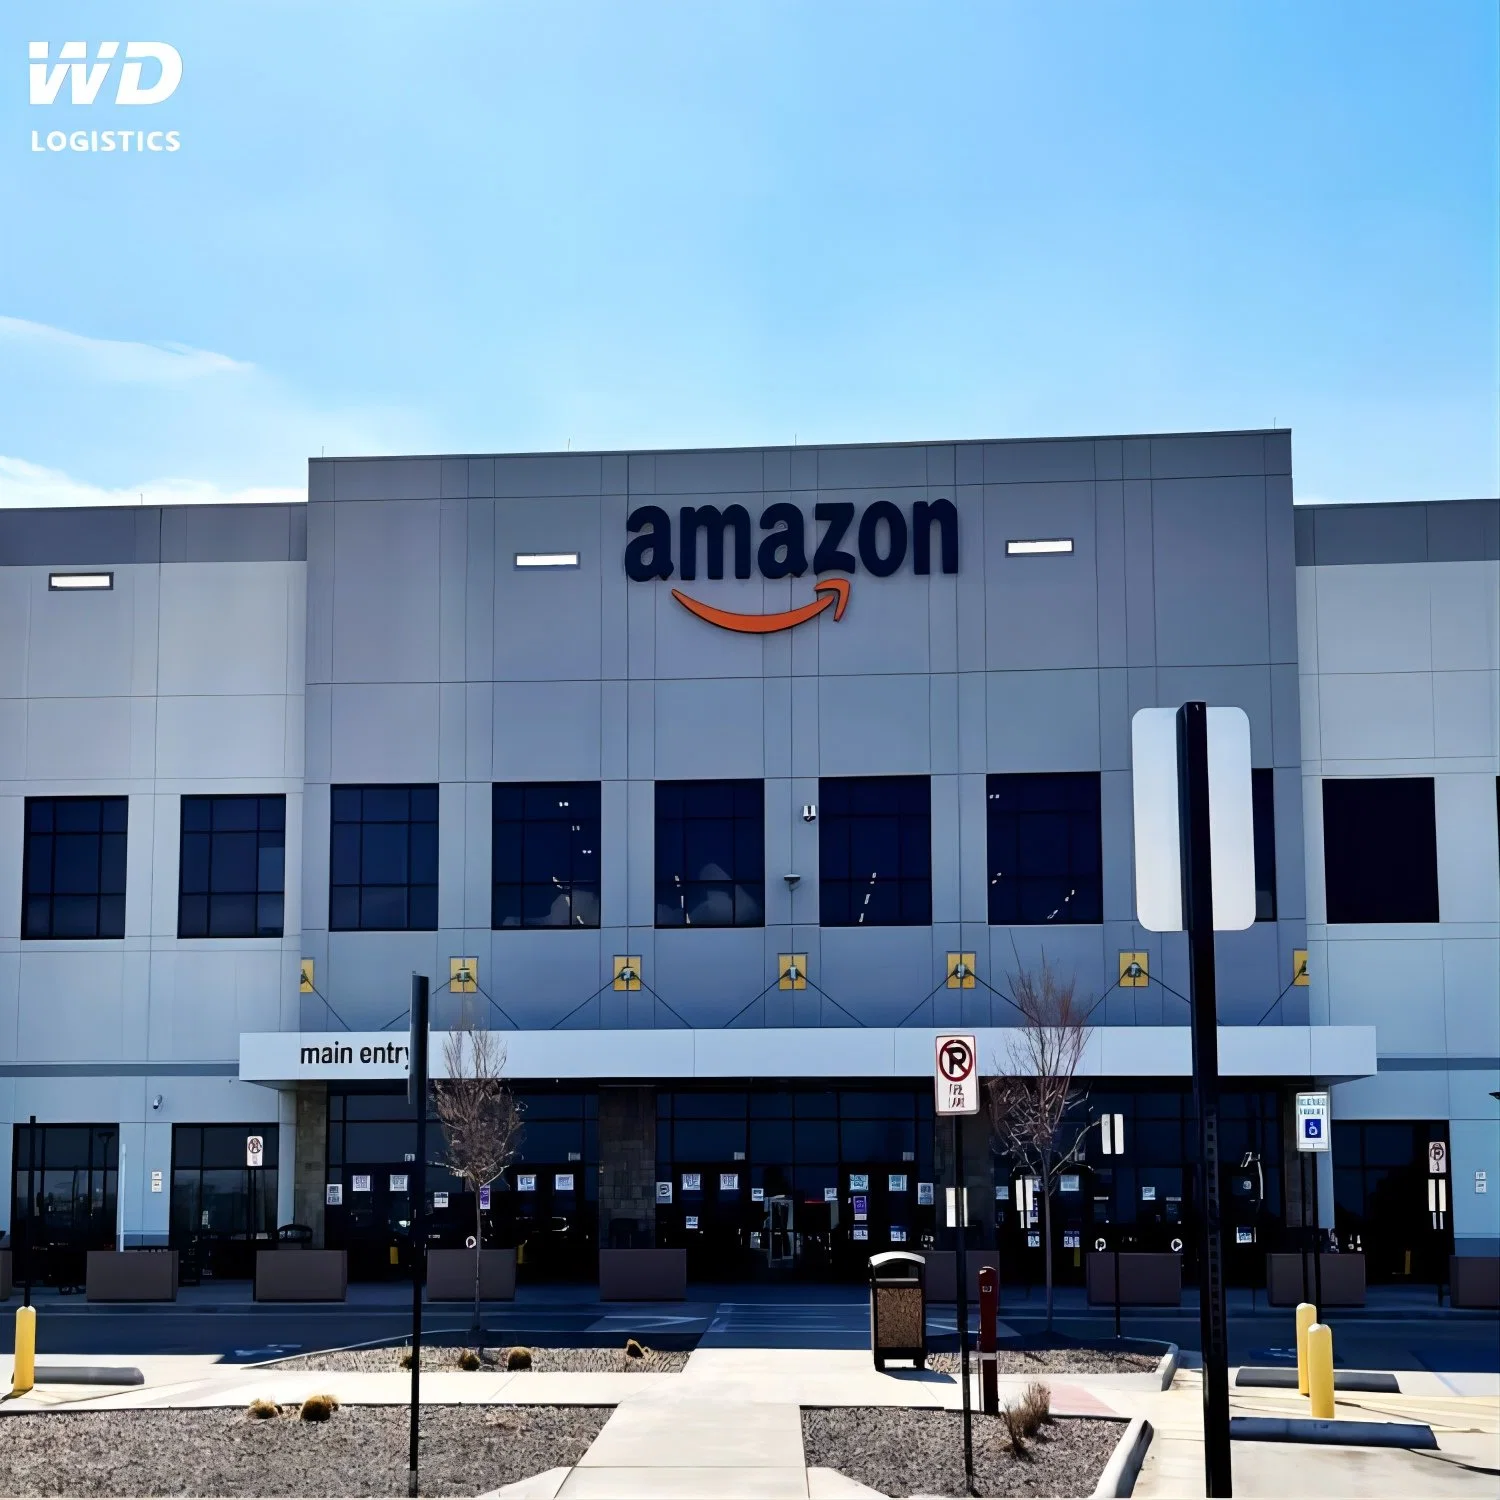 Amazon Fba Door to Door Shipping Service From China to America, Canada, Australia, England, Germany, France, Japan